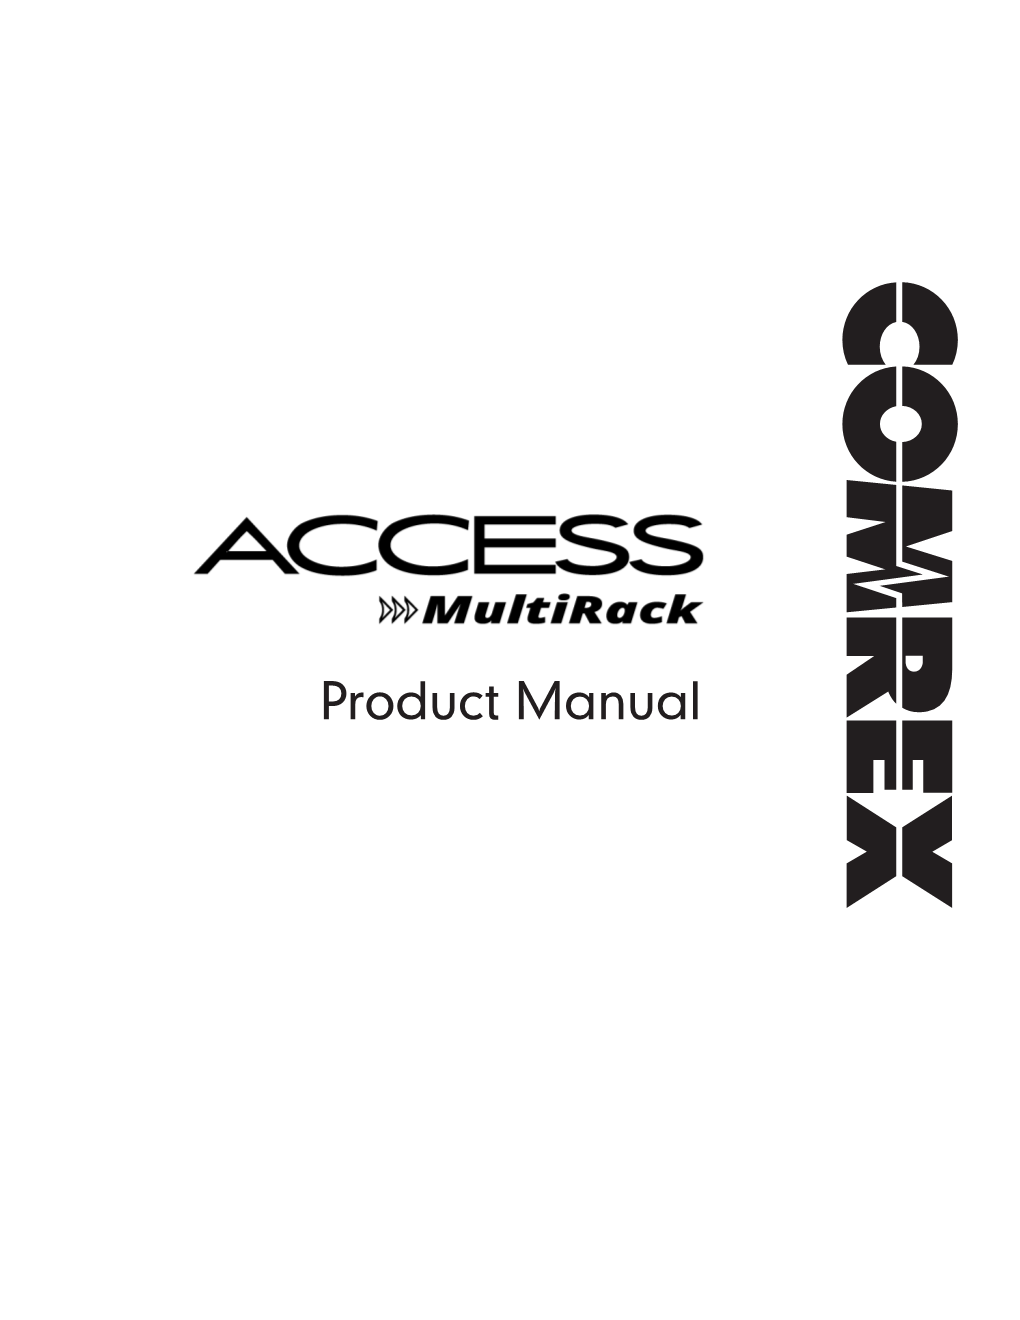 ACCESS Multirack Manual